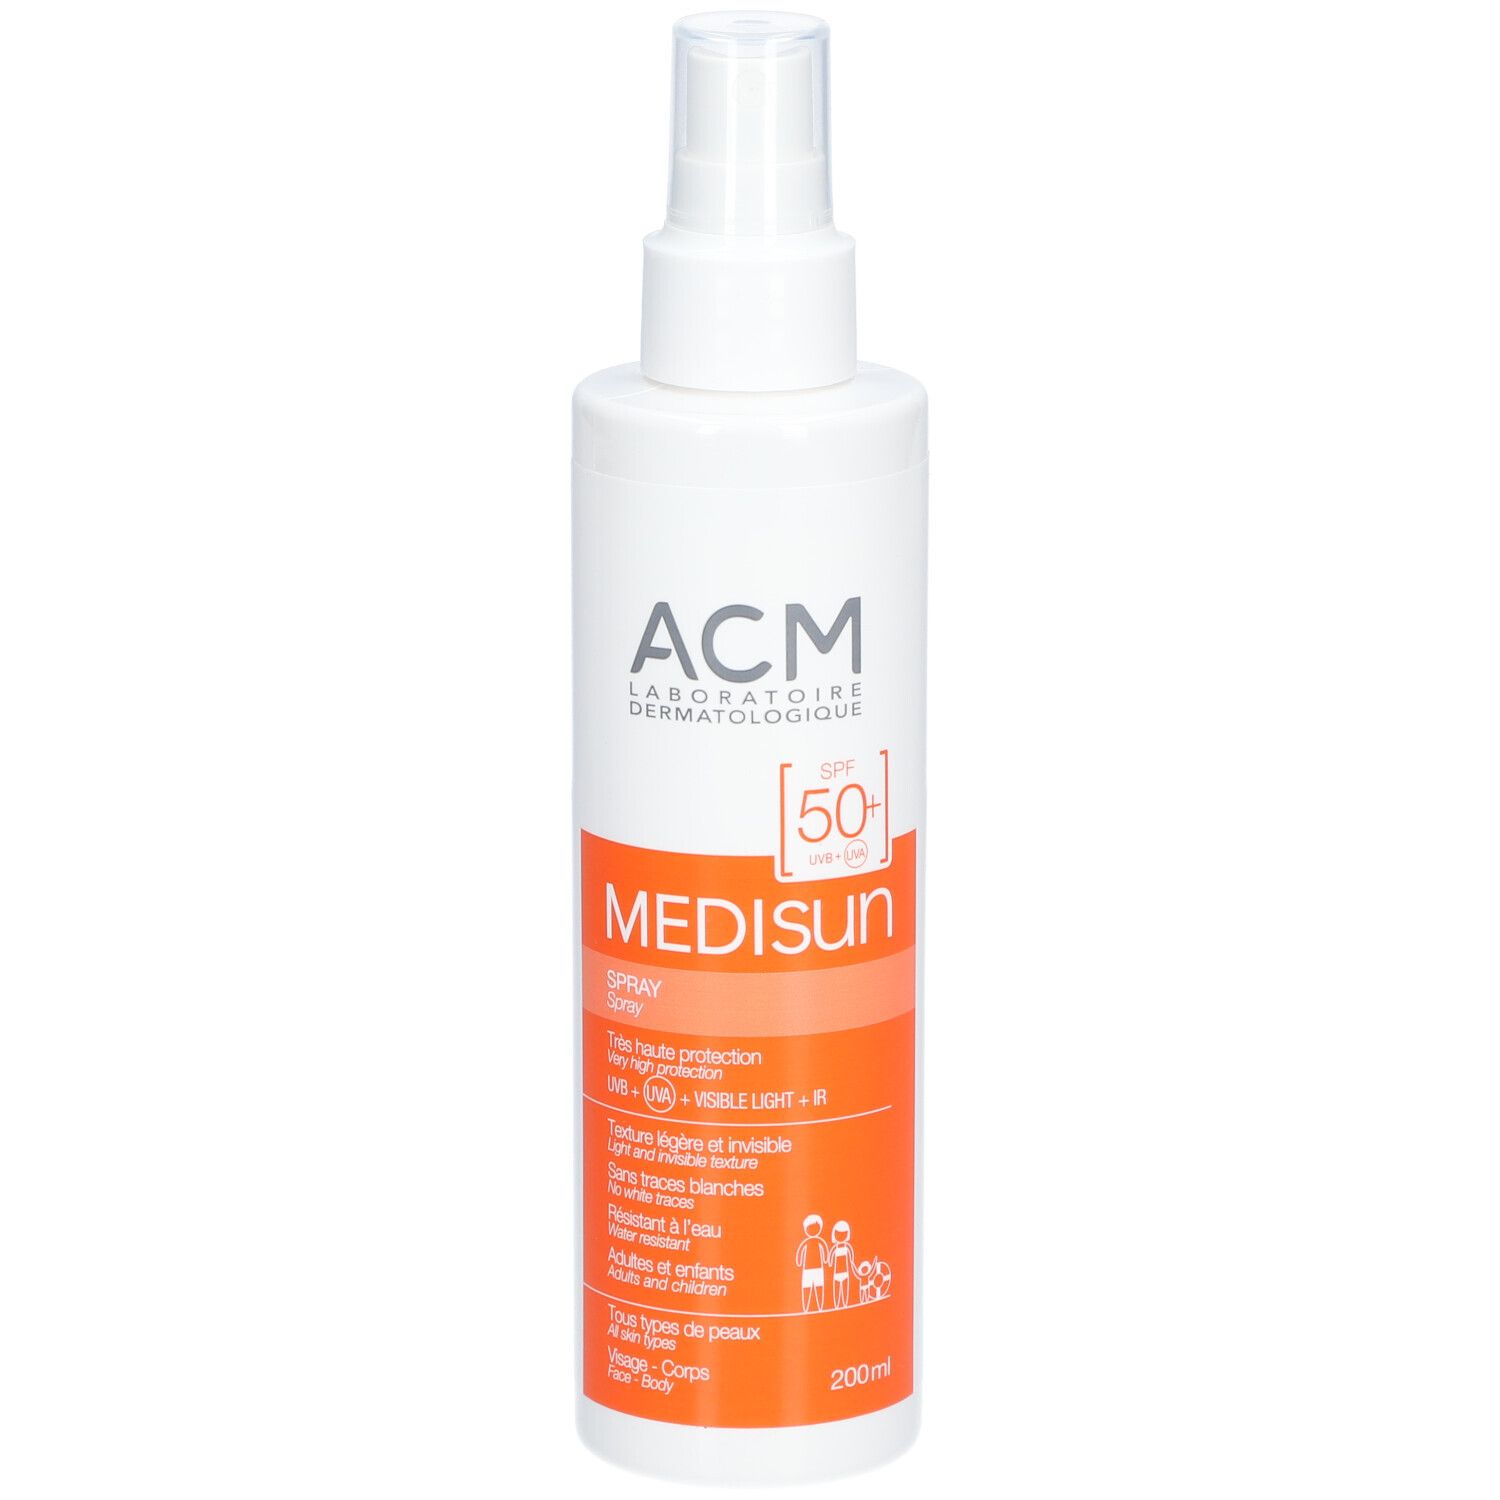 ACM Medisun Spray - SPF 50+